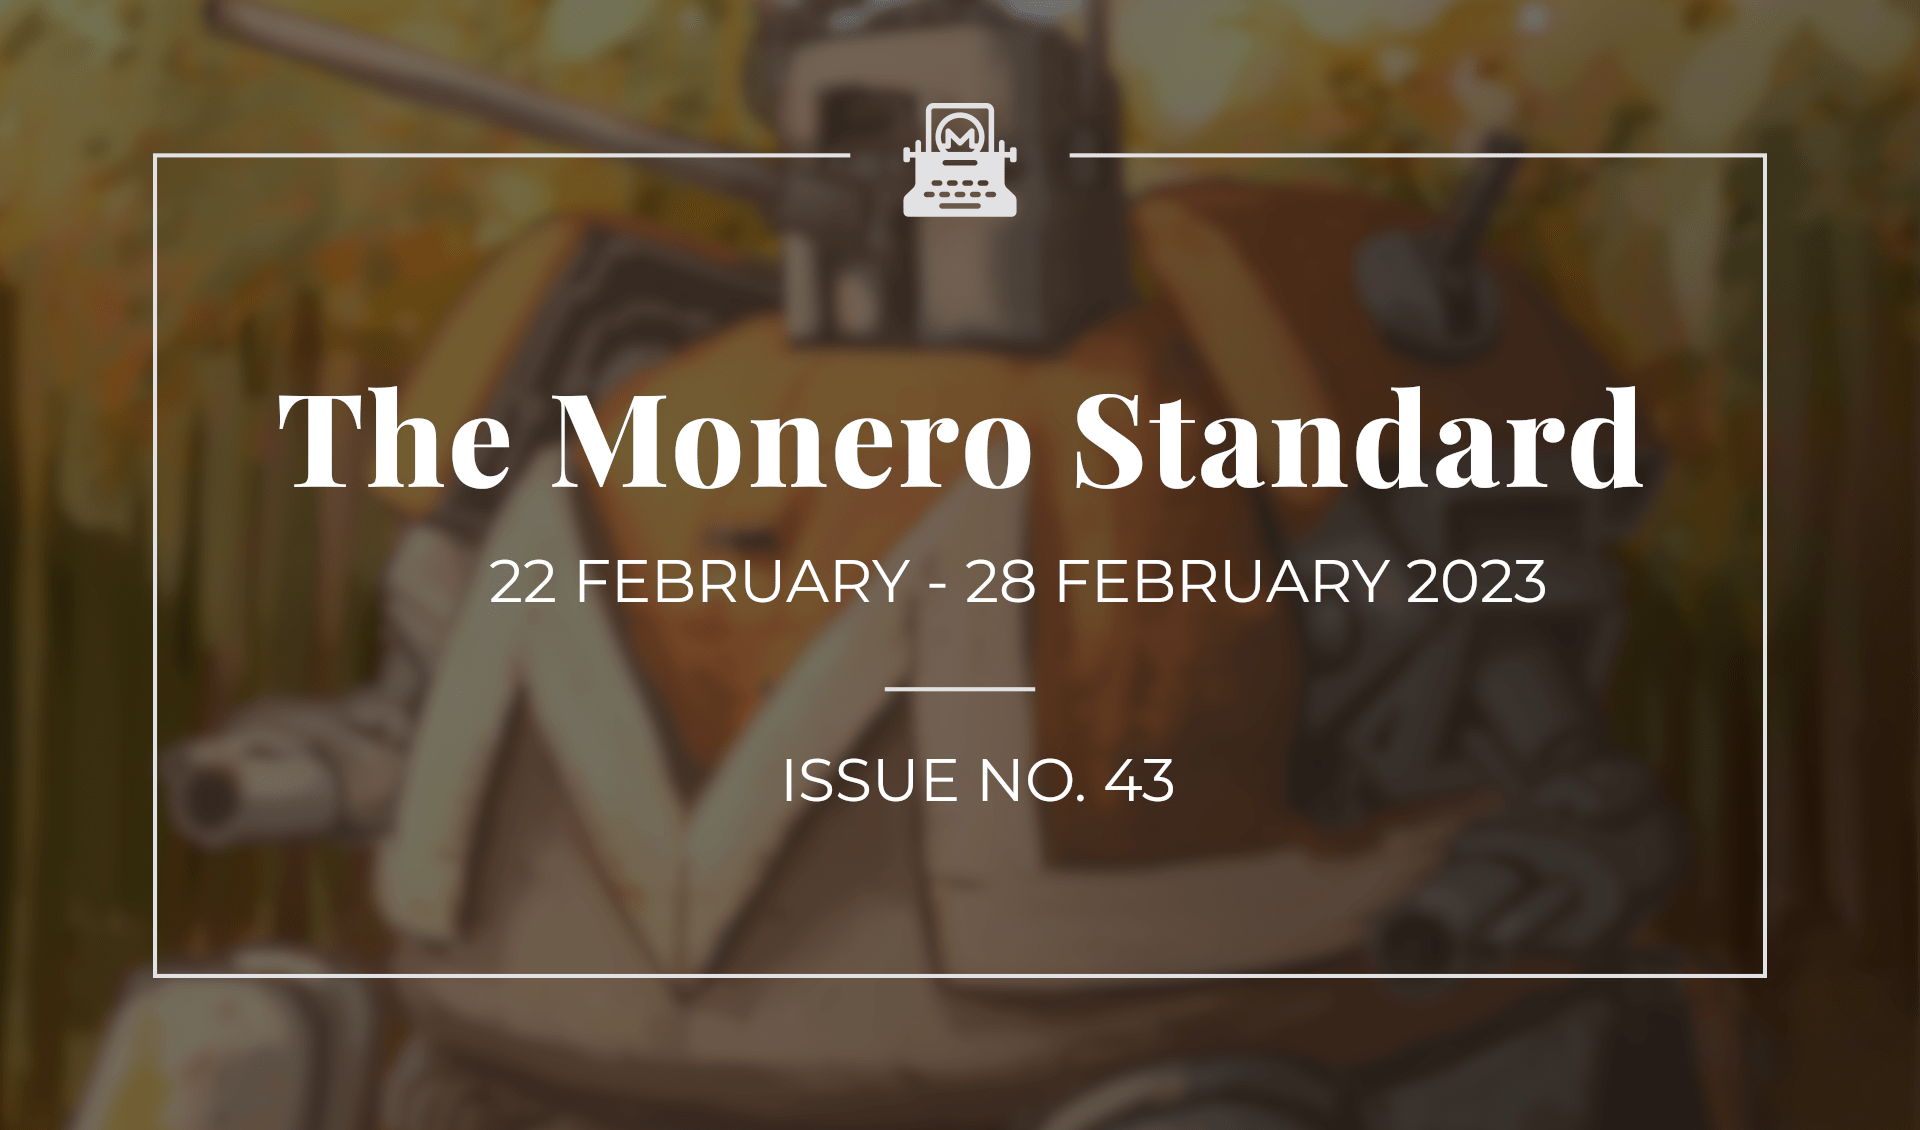 The Monero Standard #43: 22 February 2023 - 28 February 2023